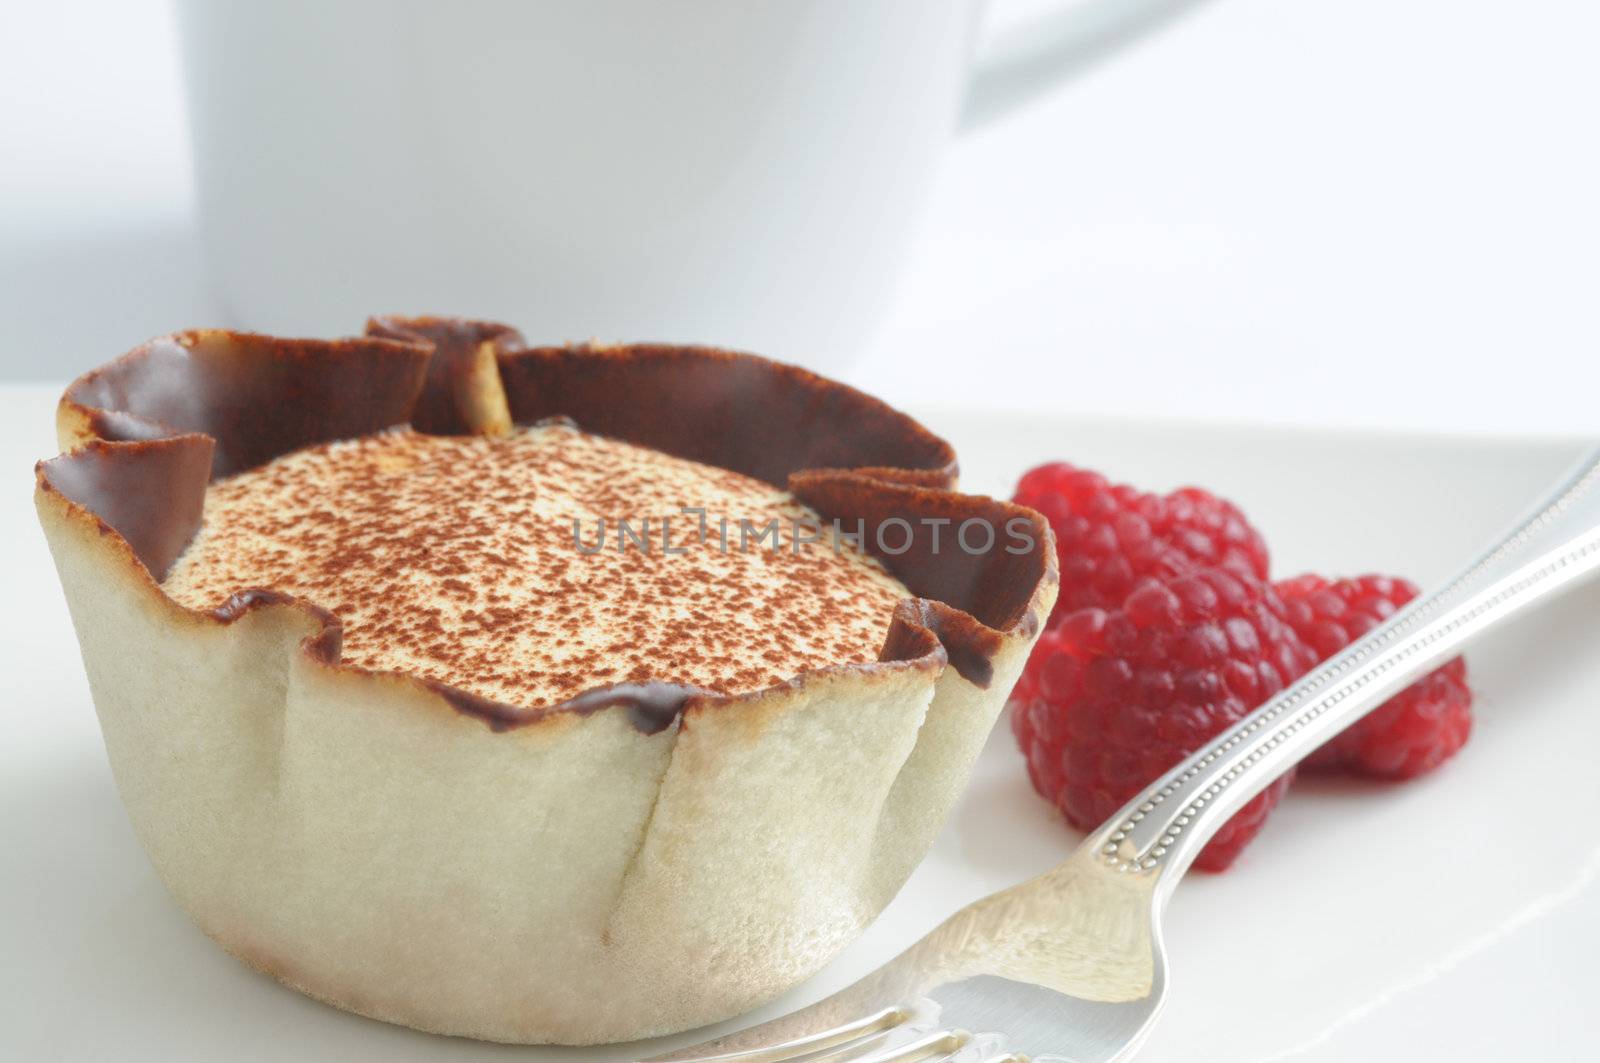 Tiramisu in a tart shell served with raspberries.